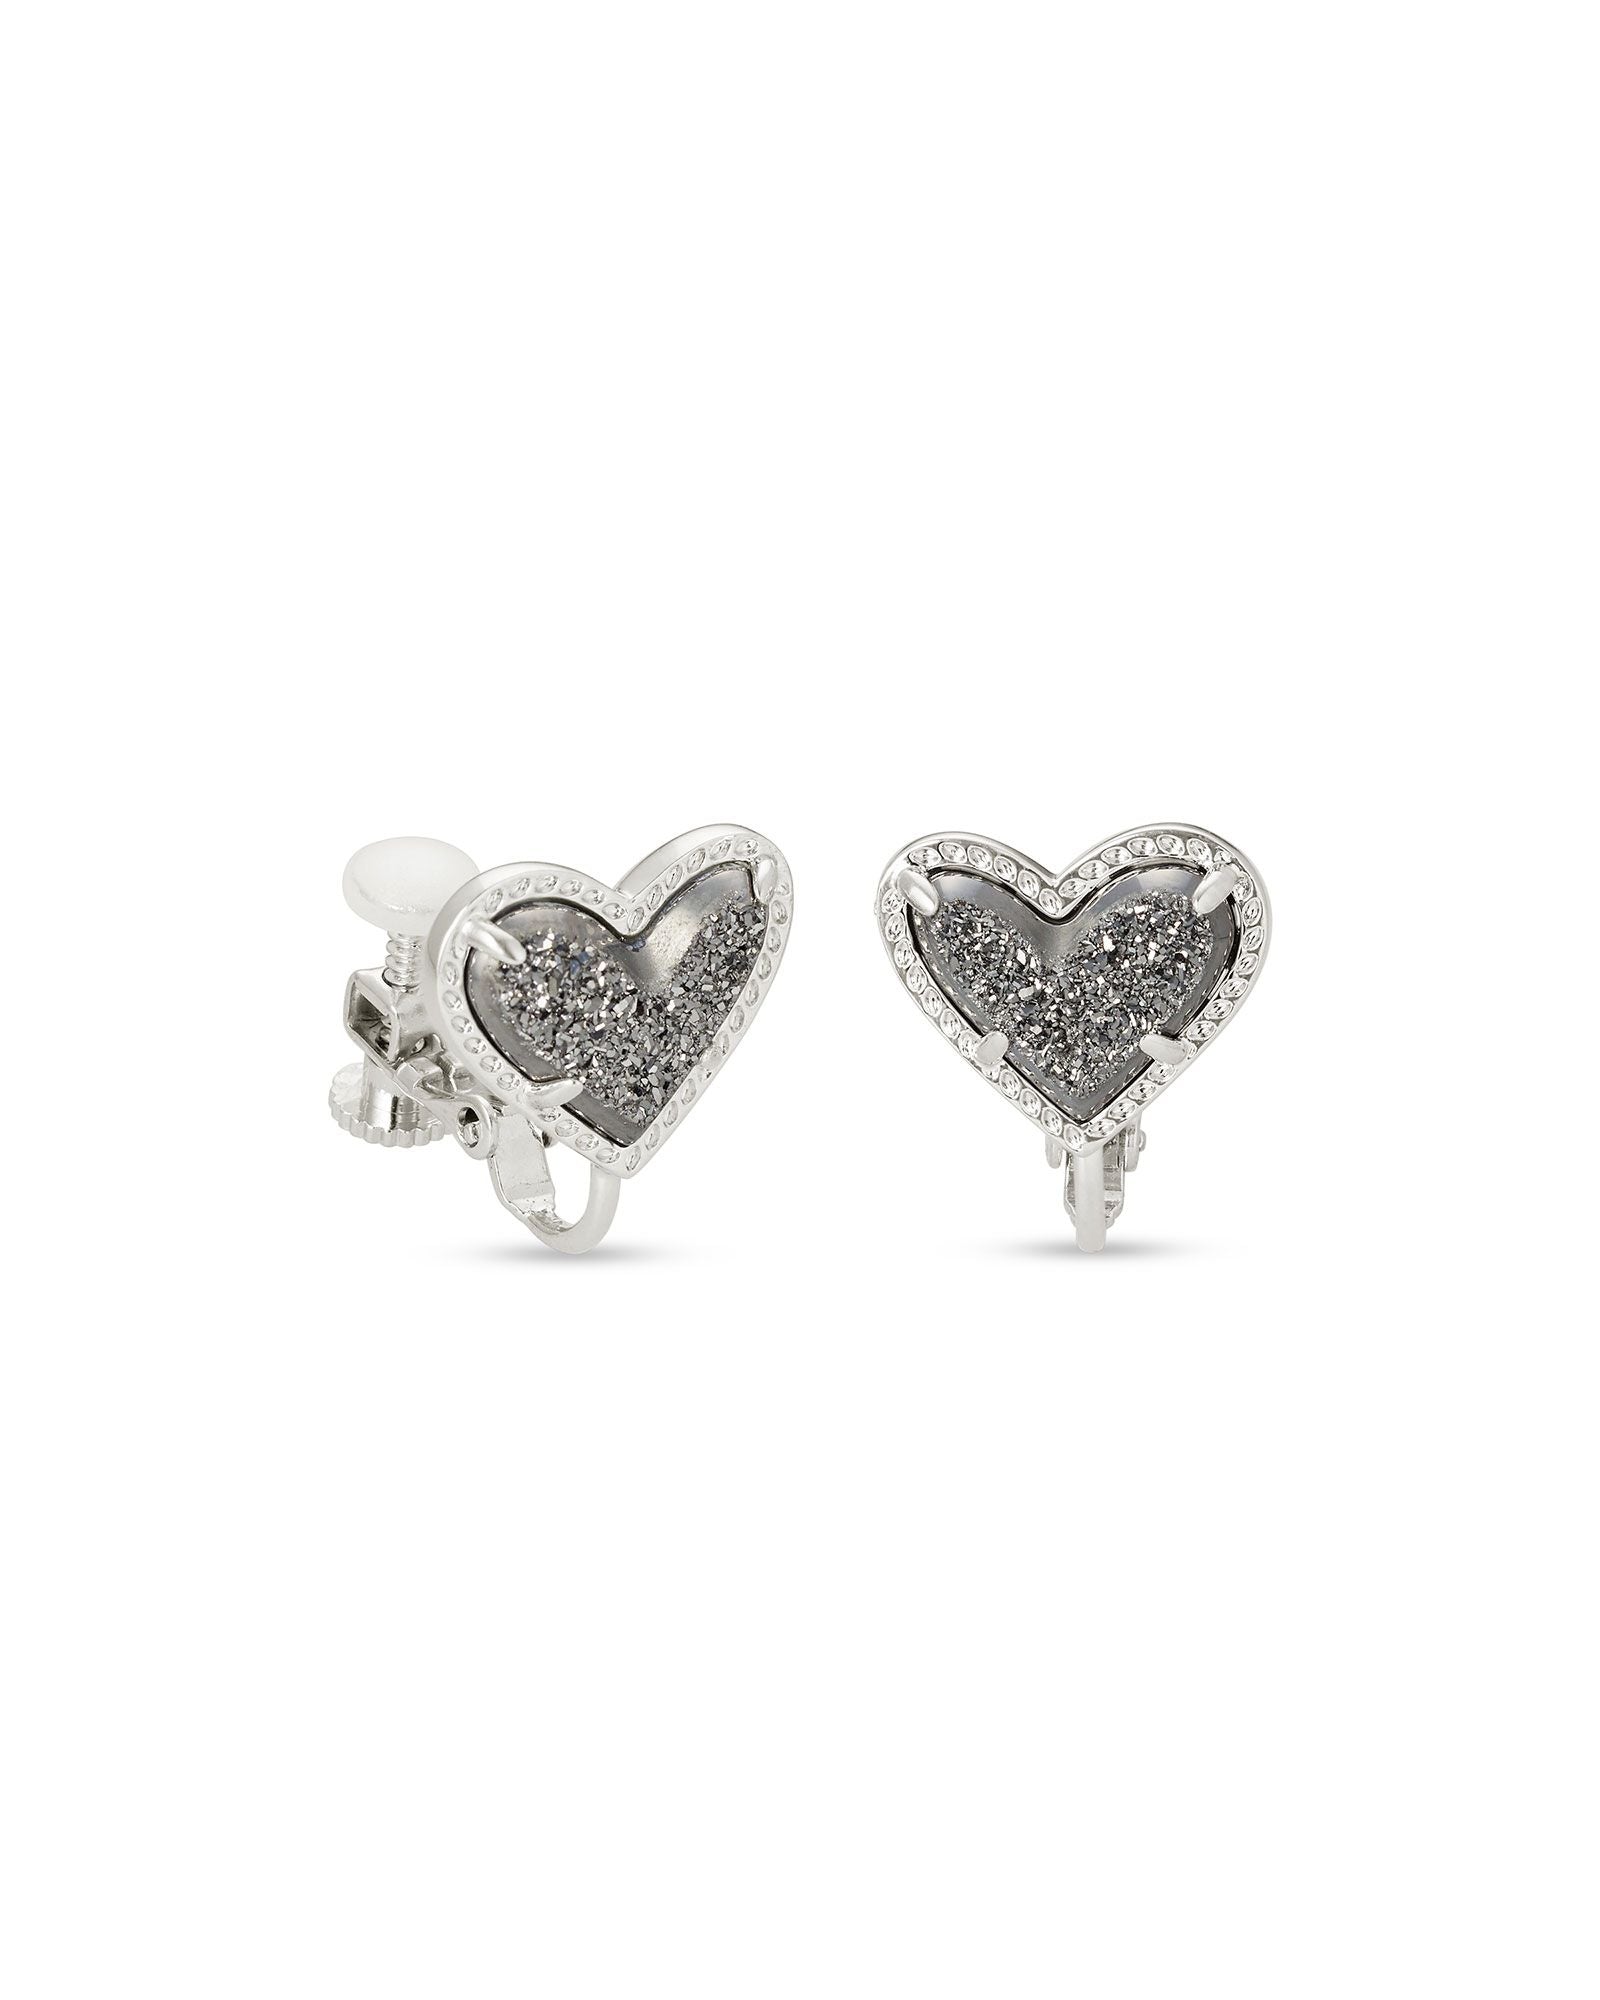 Ari Heart Clip on Earrings Platinum Drusy